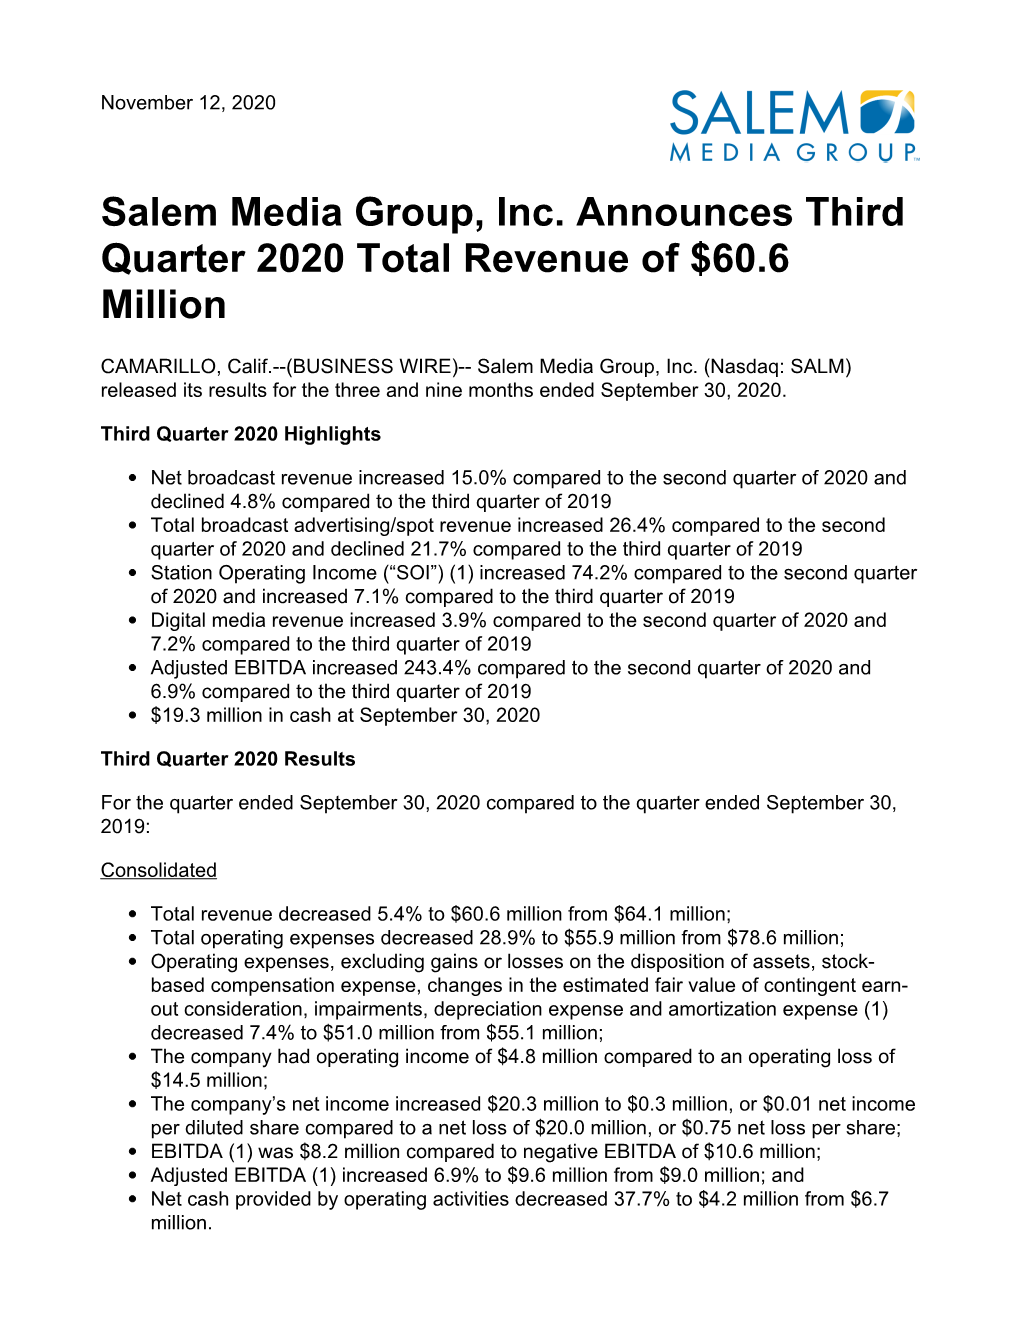 Salem Media Group, Inc. Announces Third Quarter 2020 Total Revenue of $60.6 Million